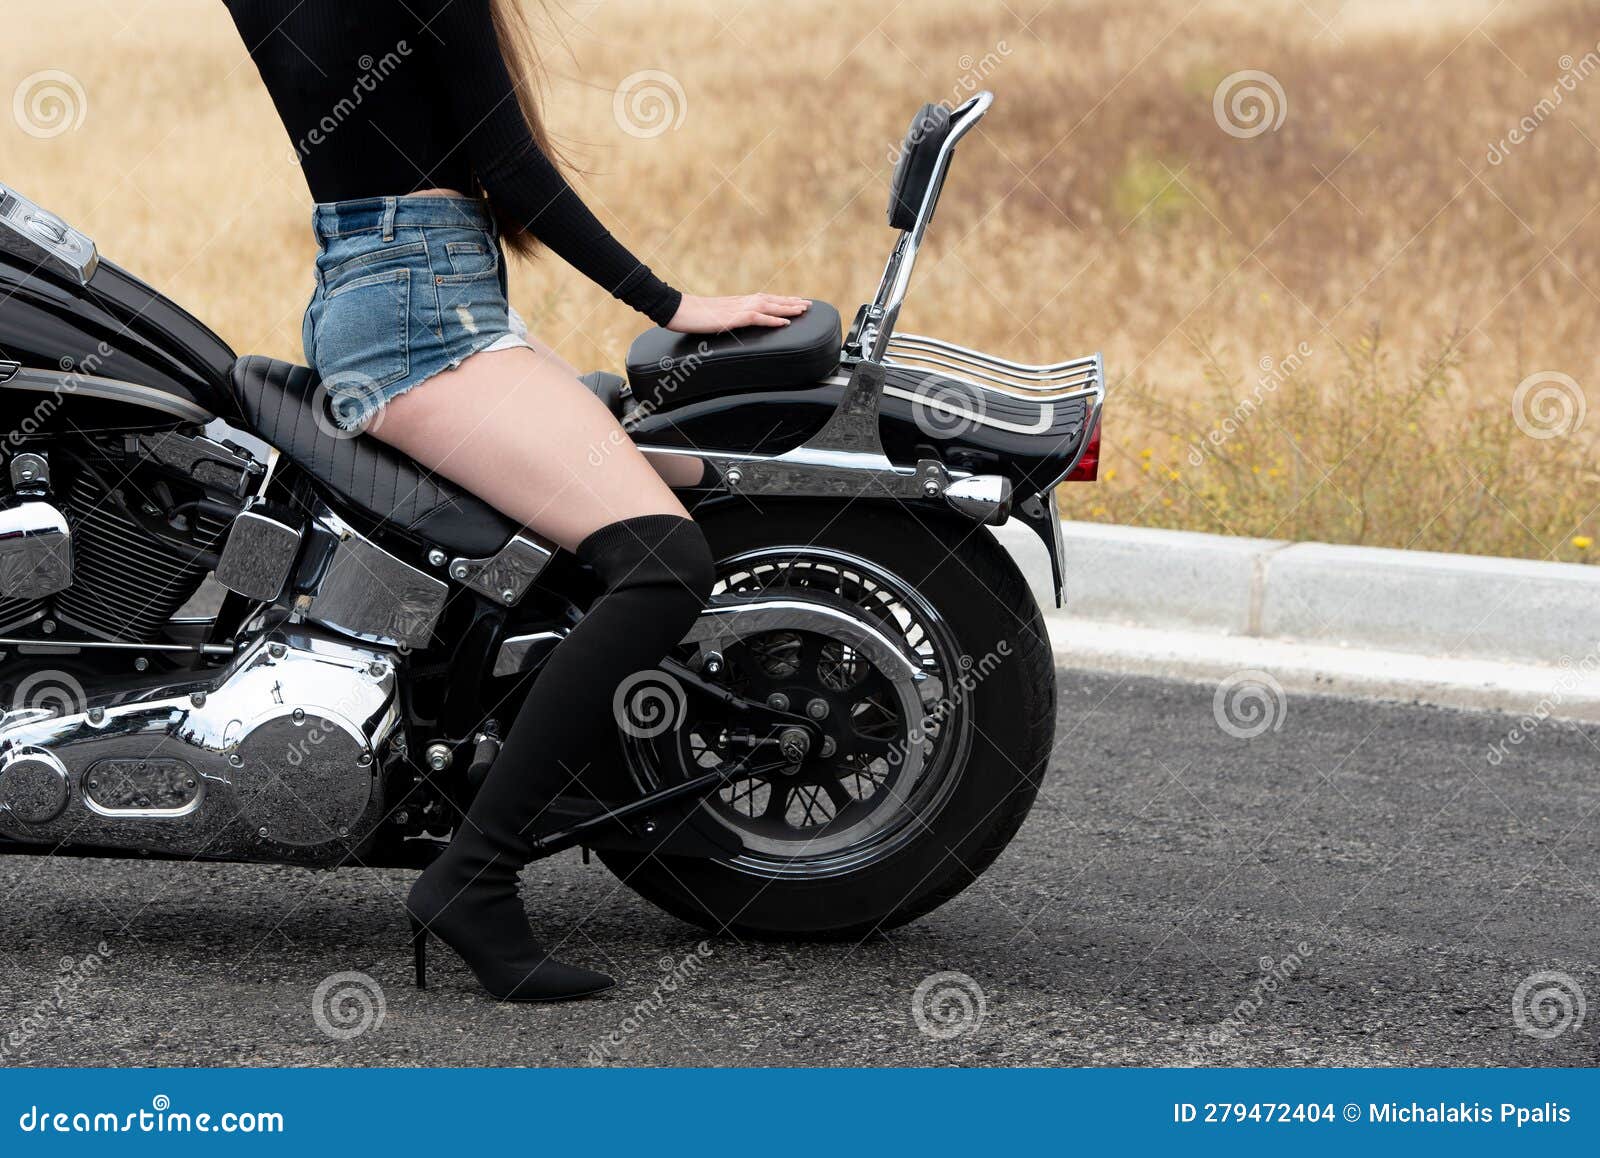 Woman Wearing High Black Heels Riding a Street Motorbike Outdoors ...